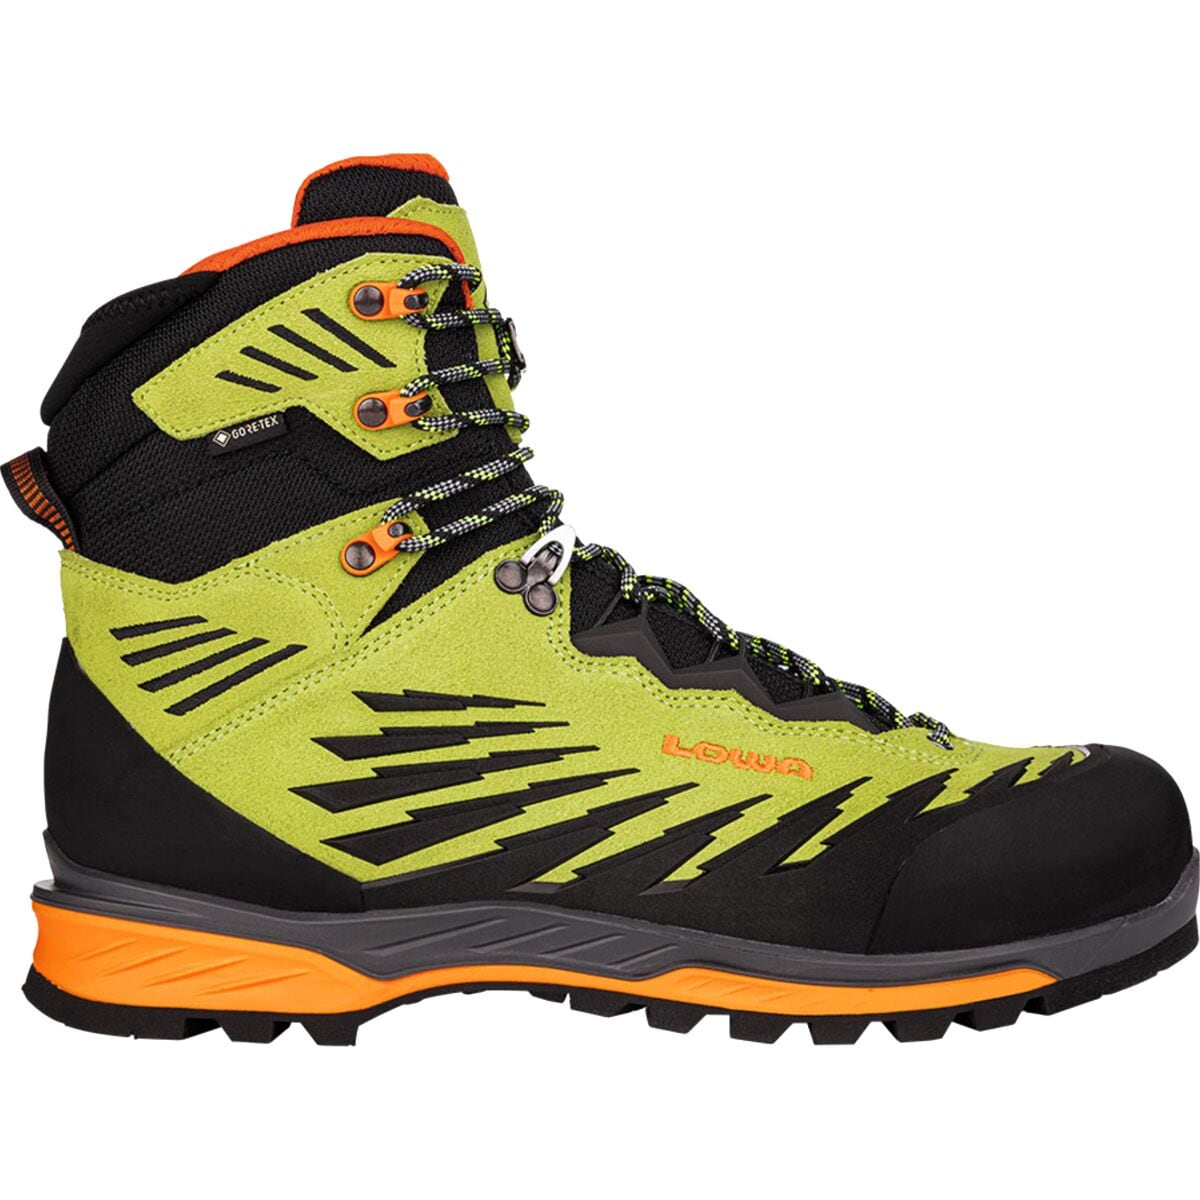 Alpine Evo GTX Mountaineering Boot - Men